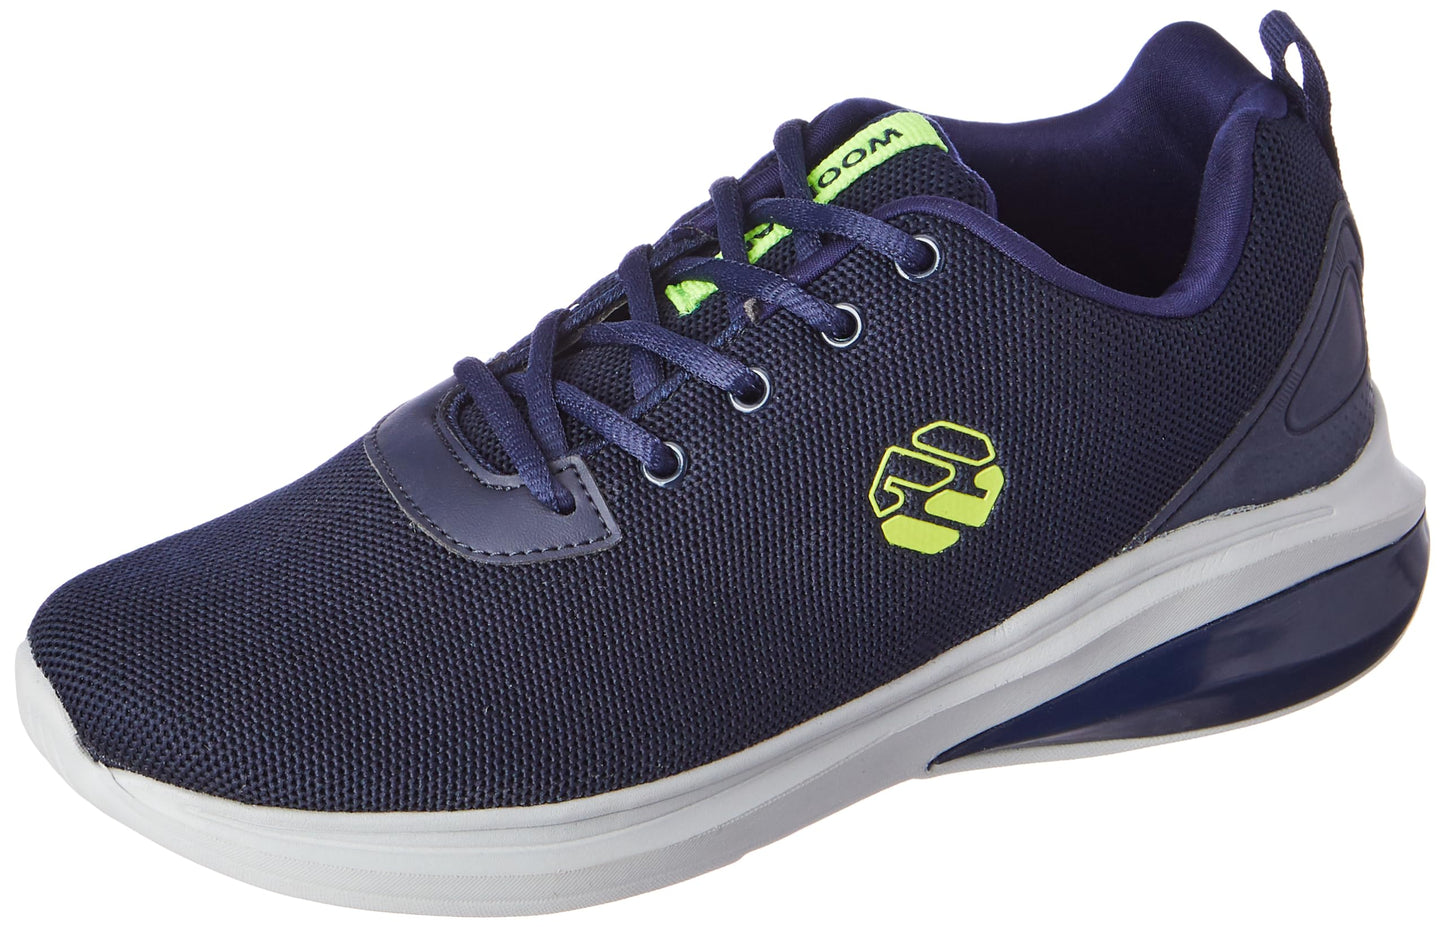 Woodland Men's Blue MESH Sports Shoes-6 UK (40 EU) (Navy)